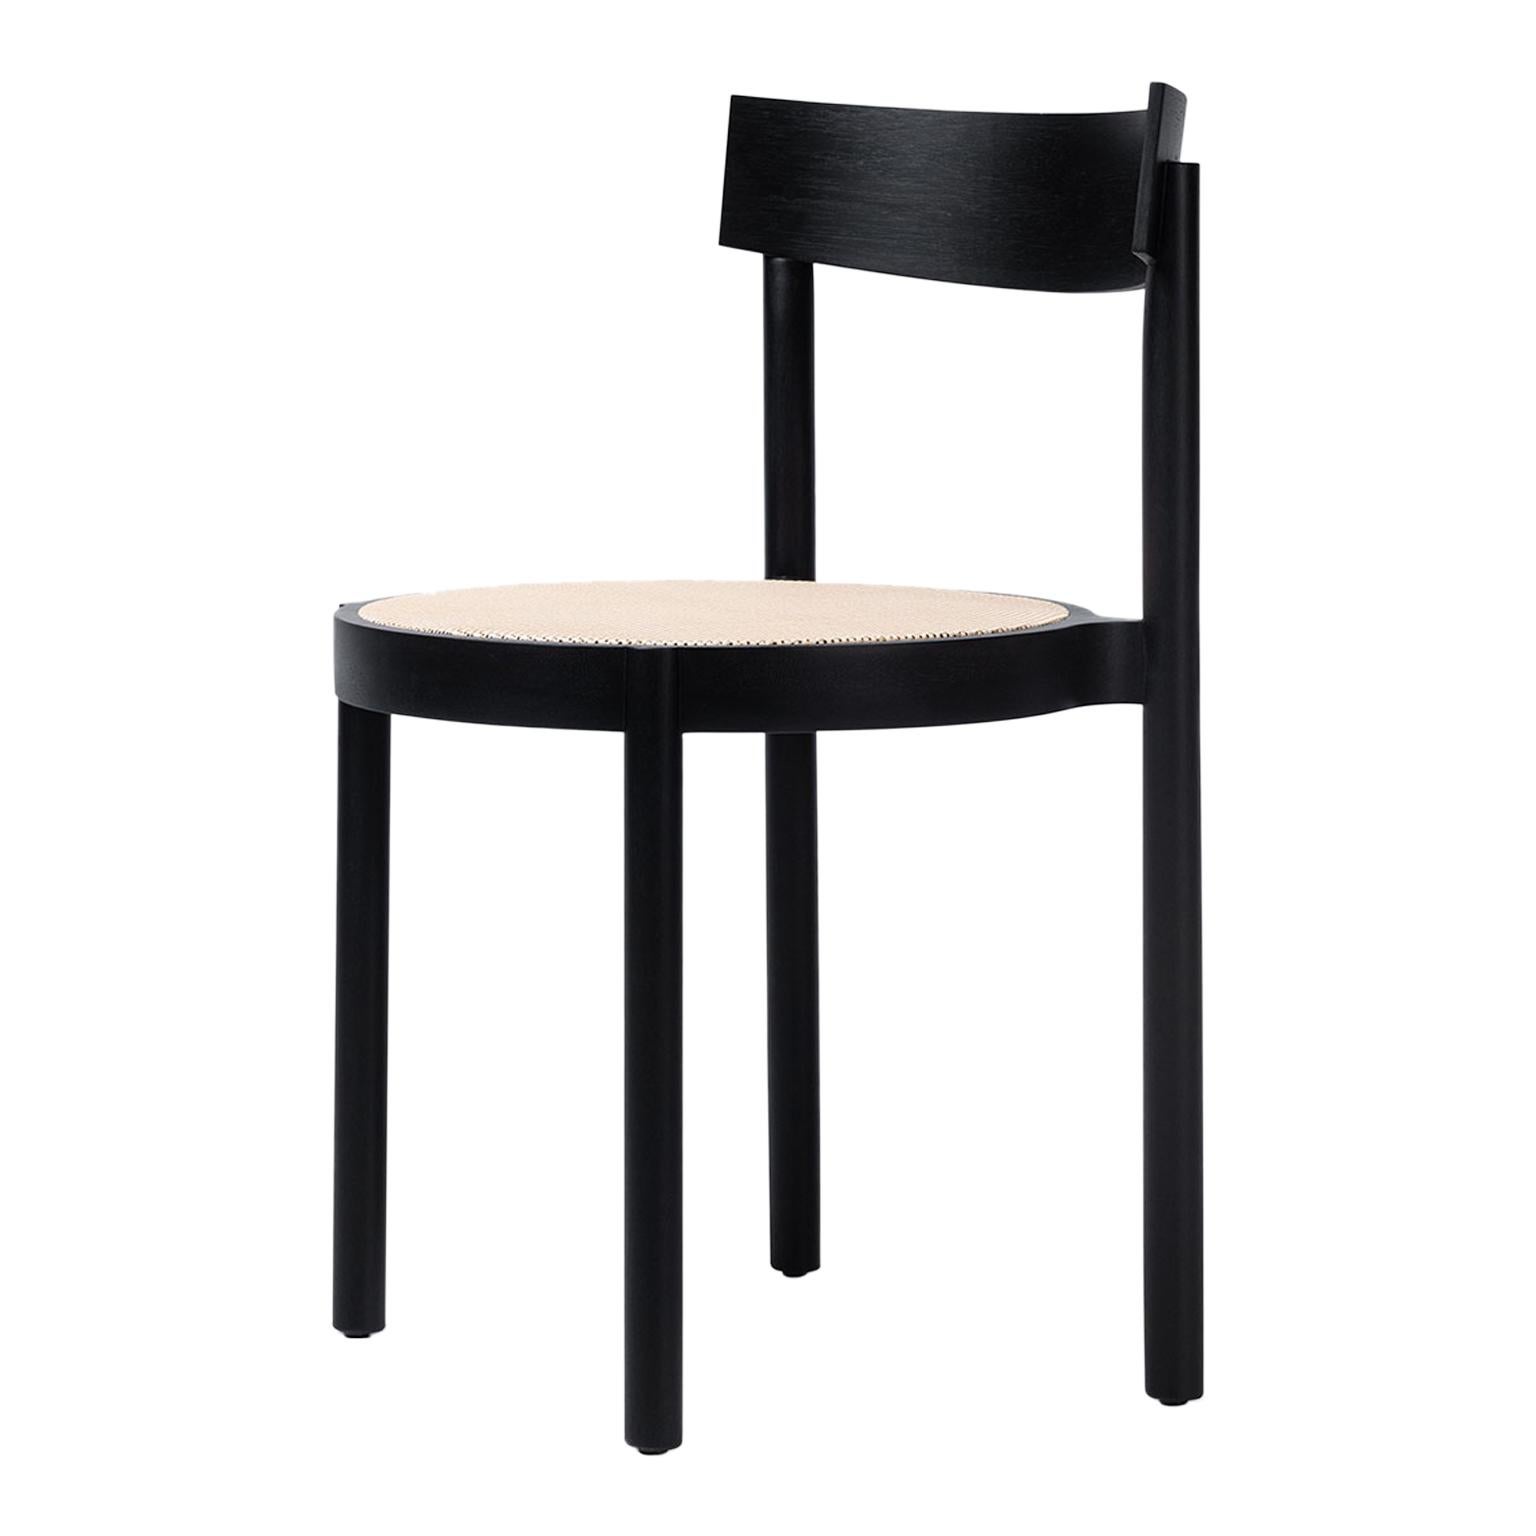 Gravatá Chair in Black by Wentz, Brazilian Contemporary Design